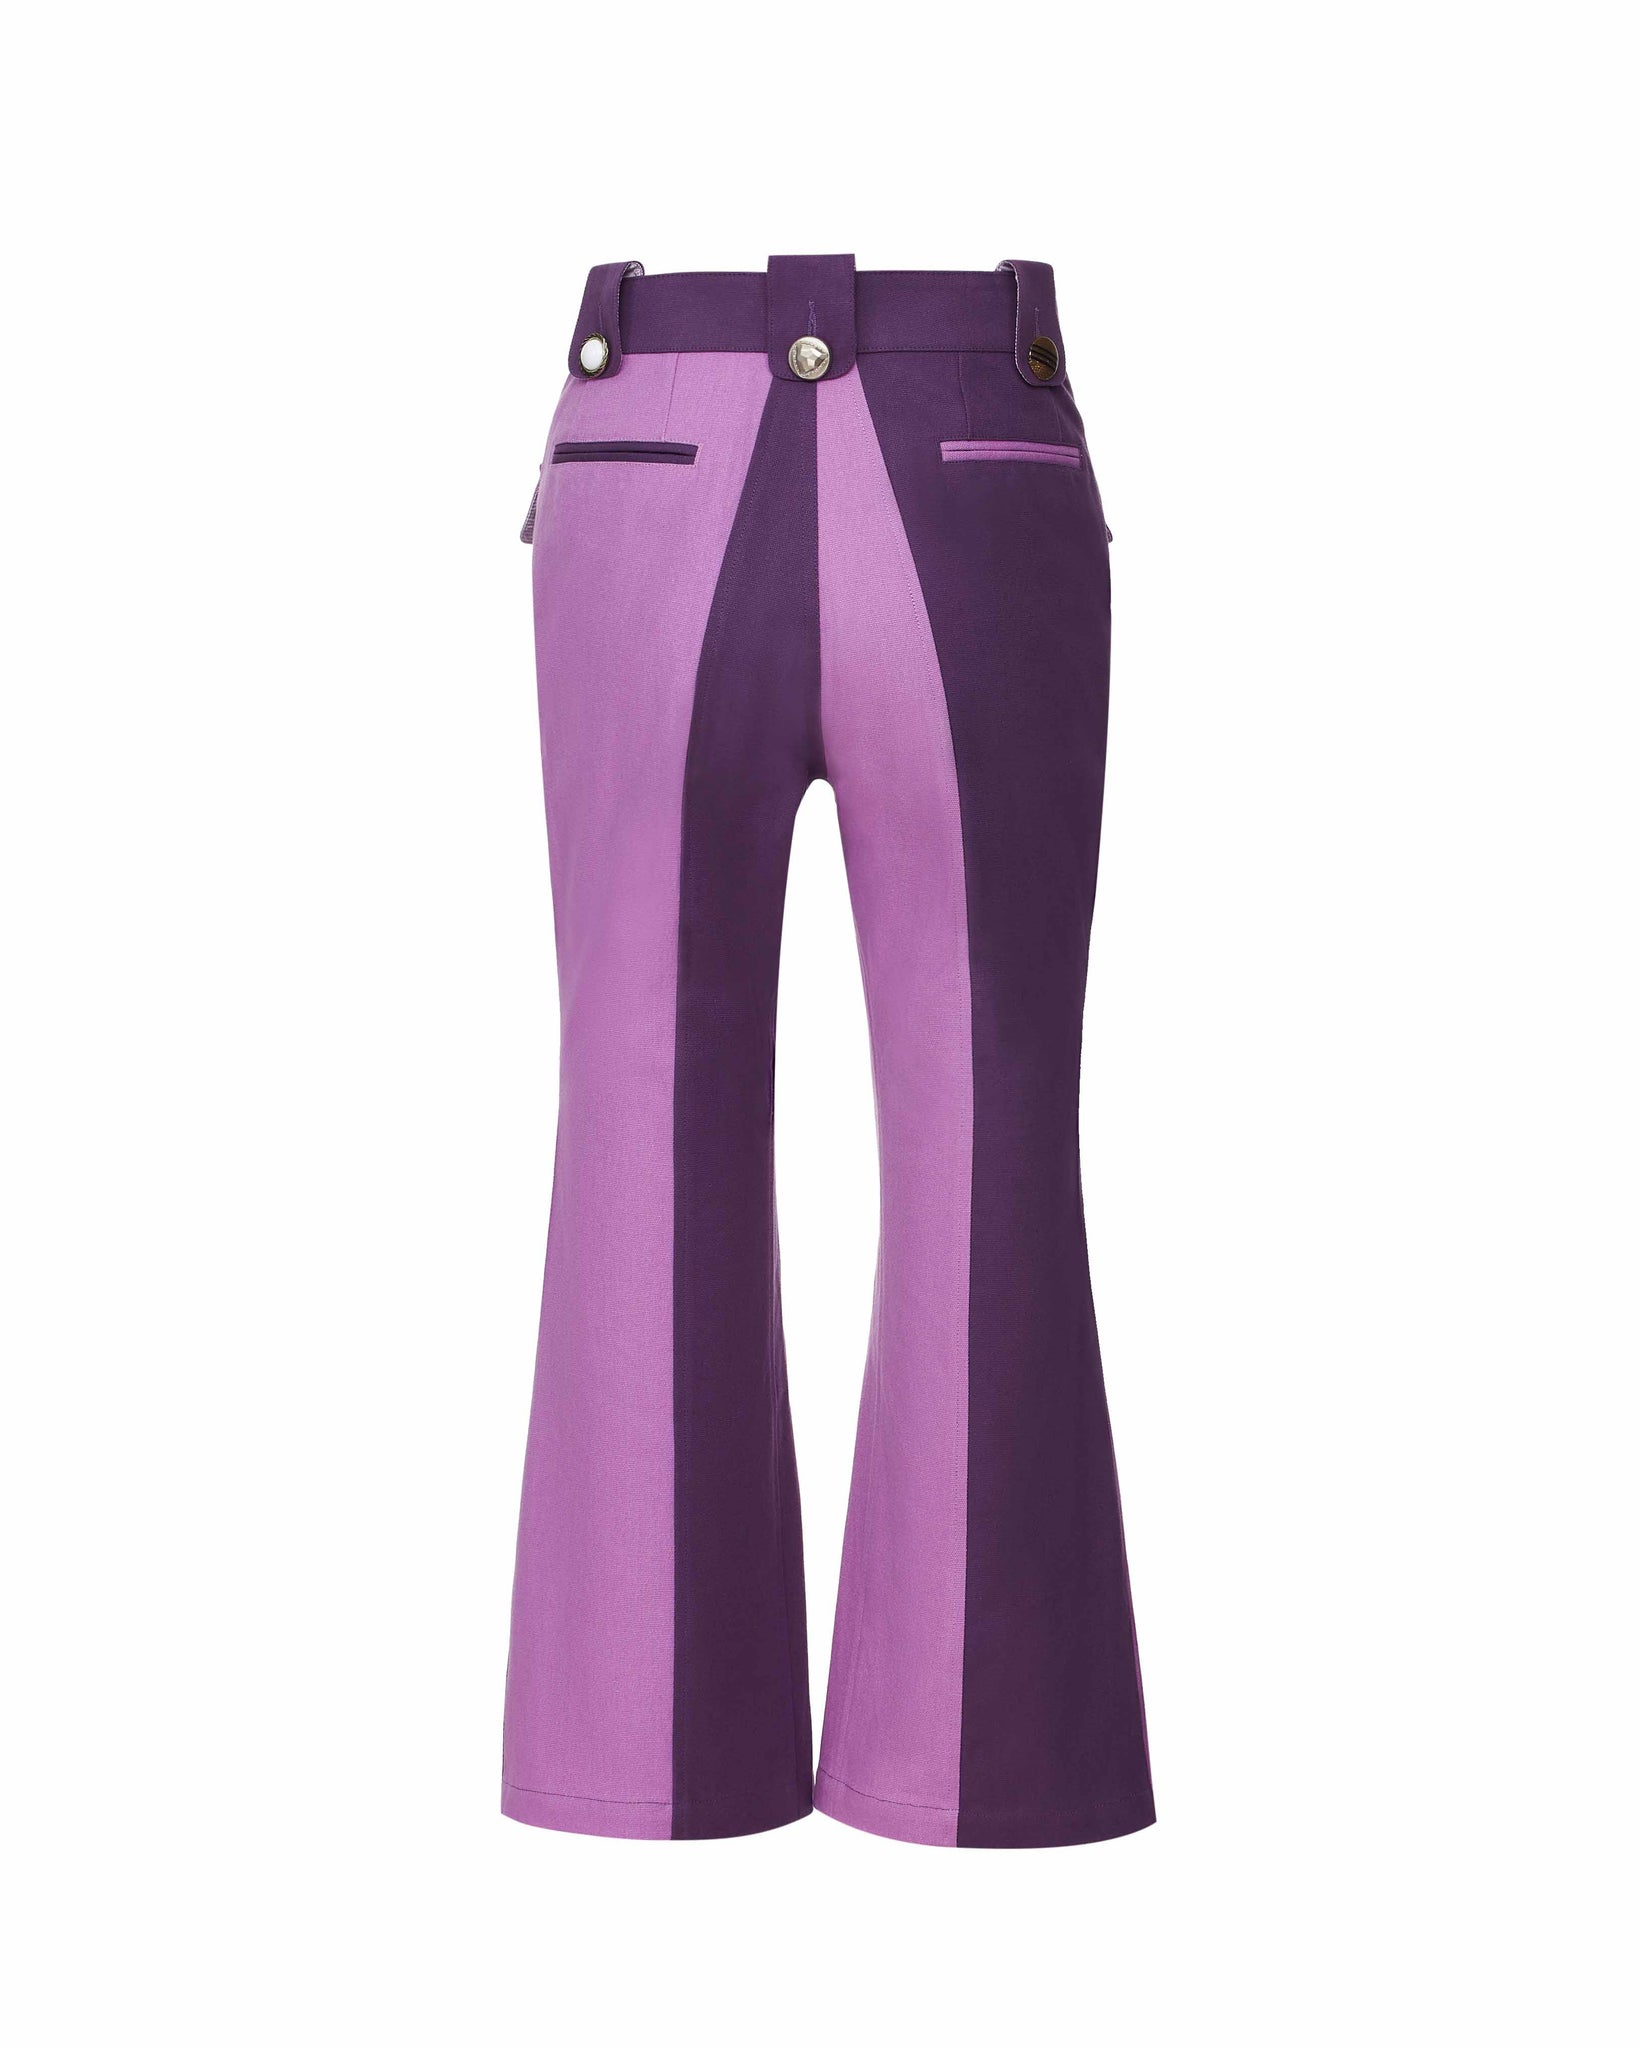 Load image into Gallery viewer, Big Girl Pants (Royal Lilac)
